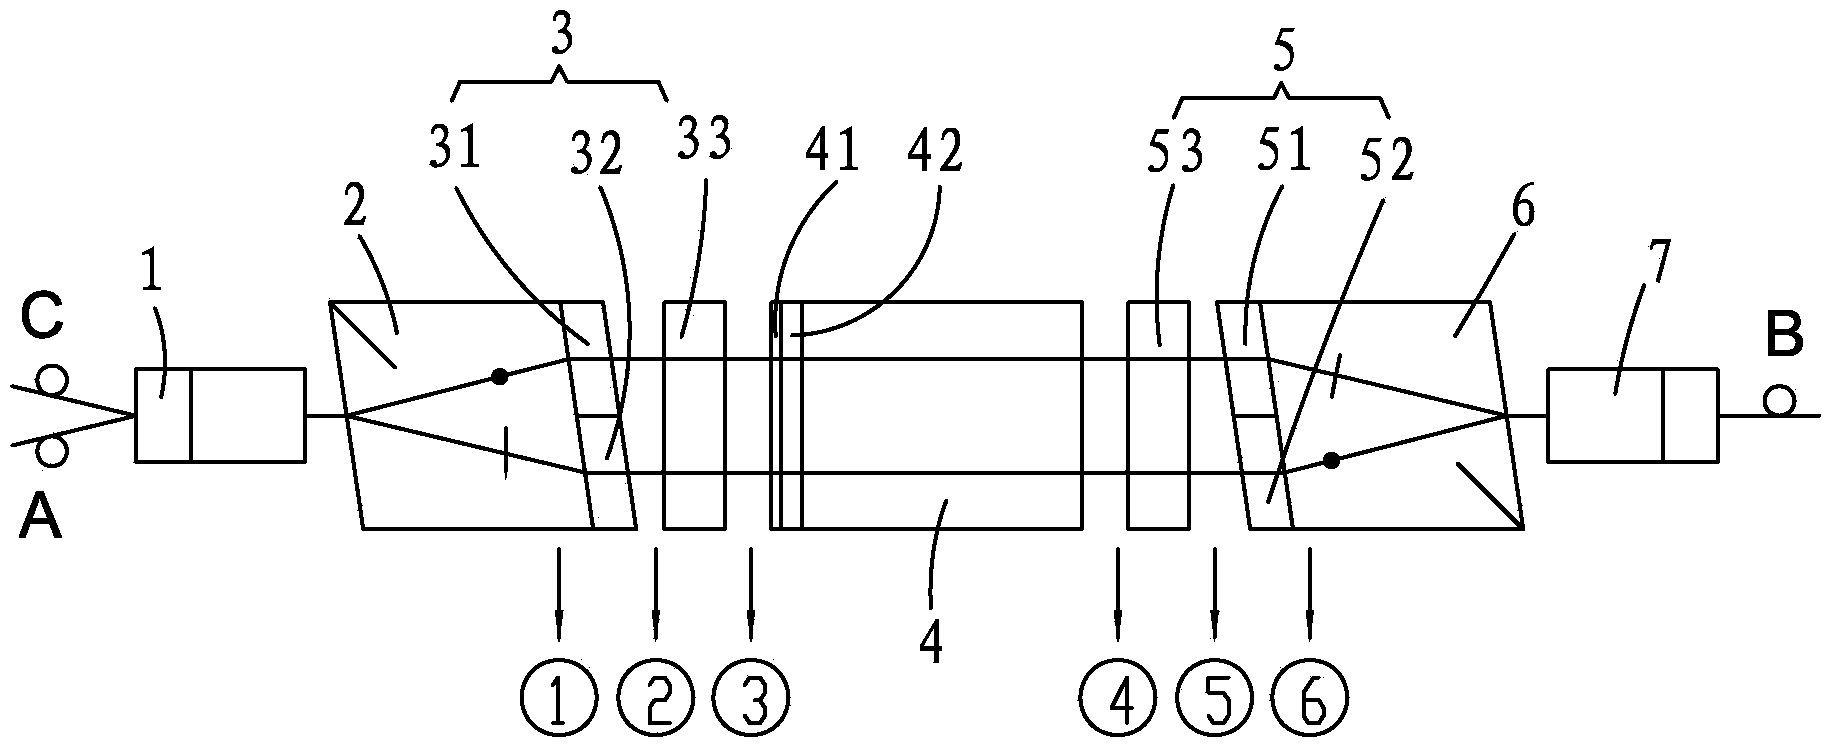 Three-port optical circulator